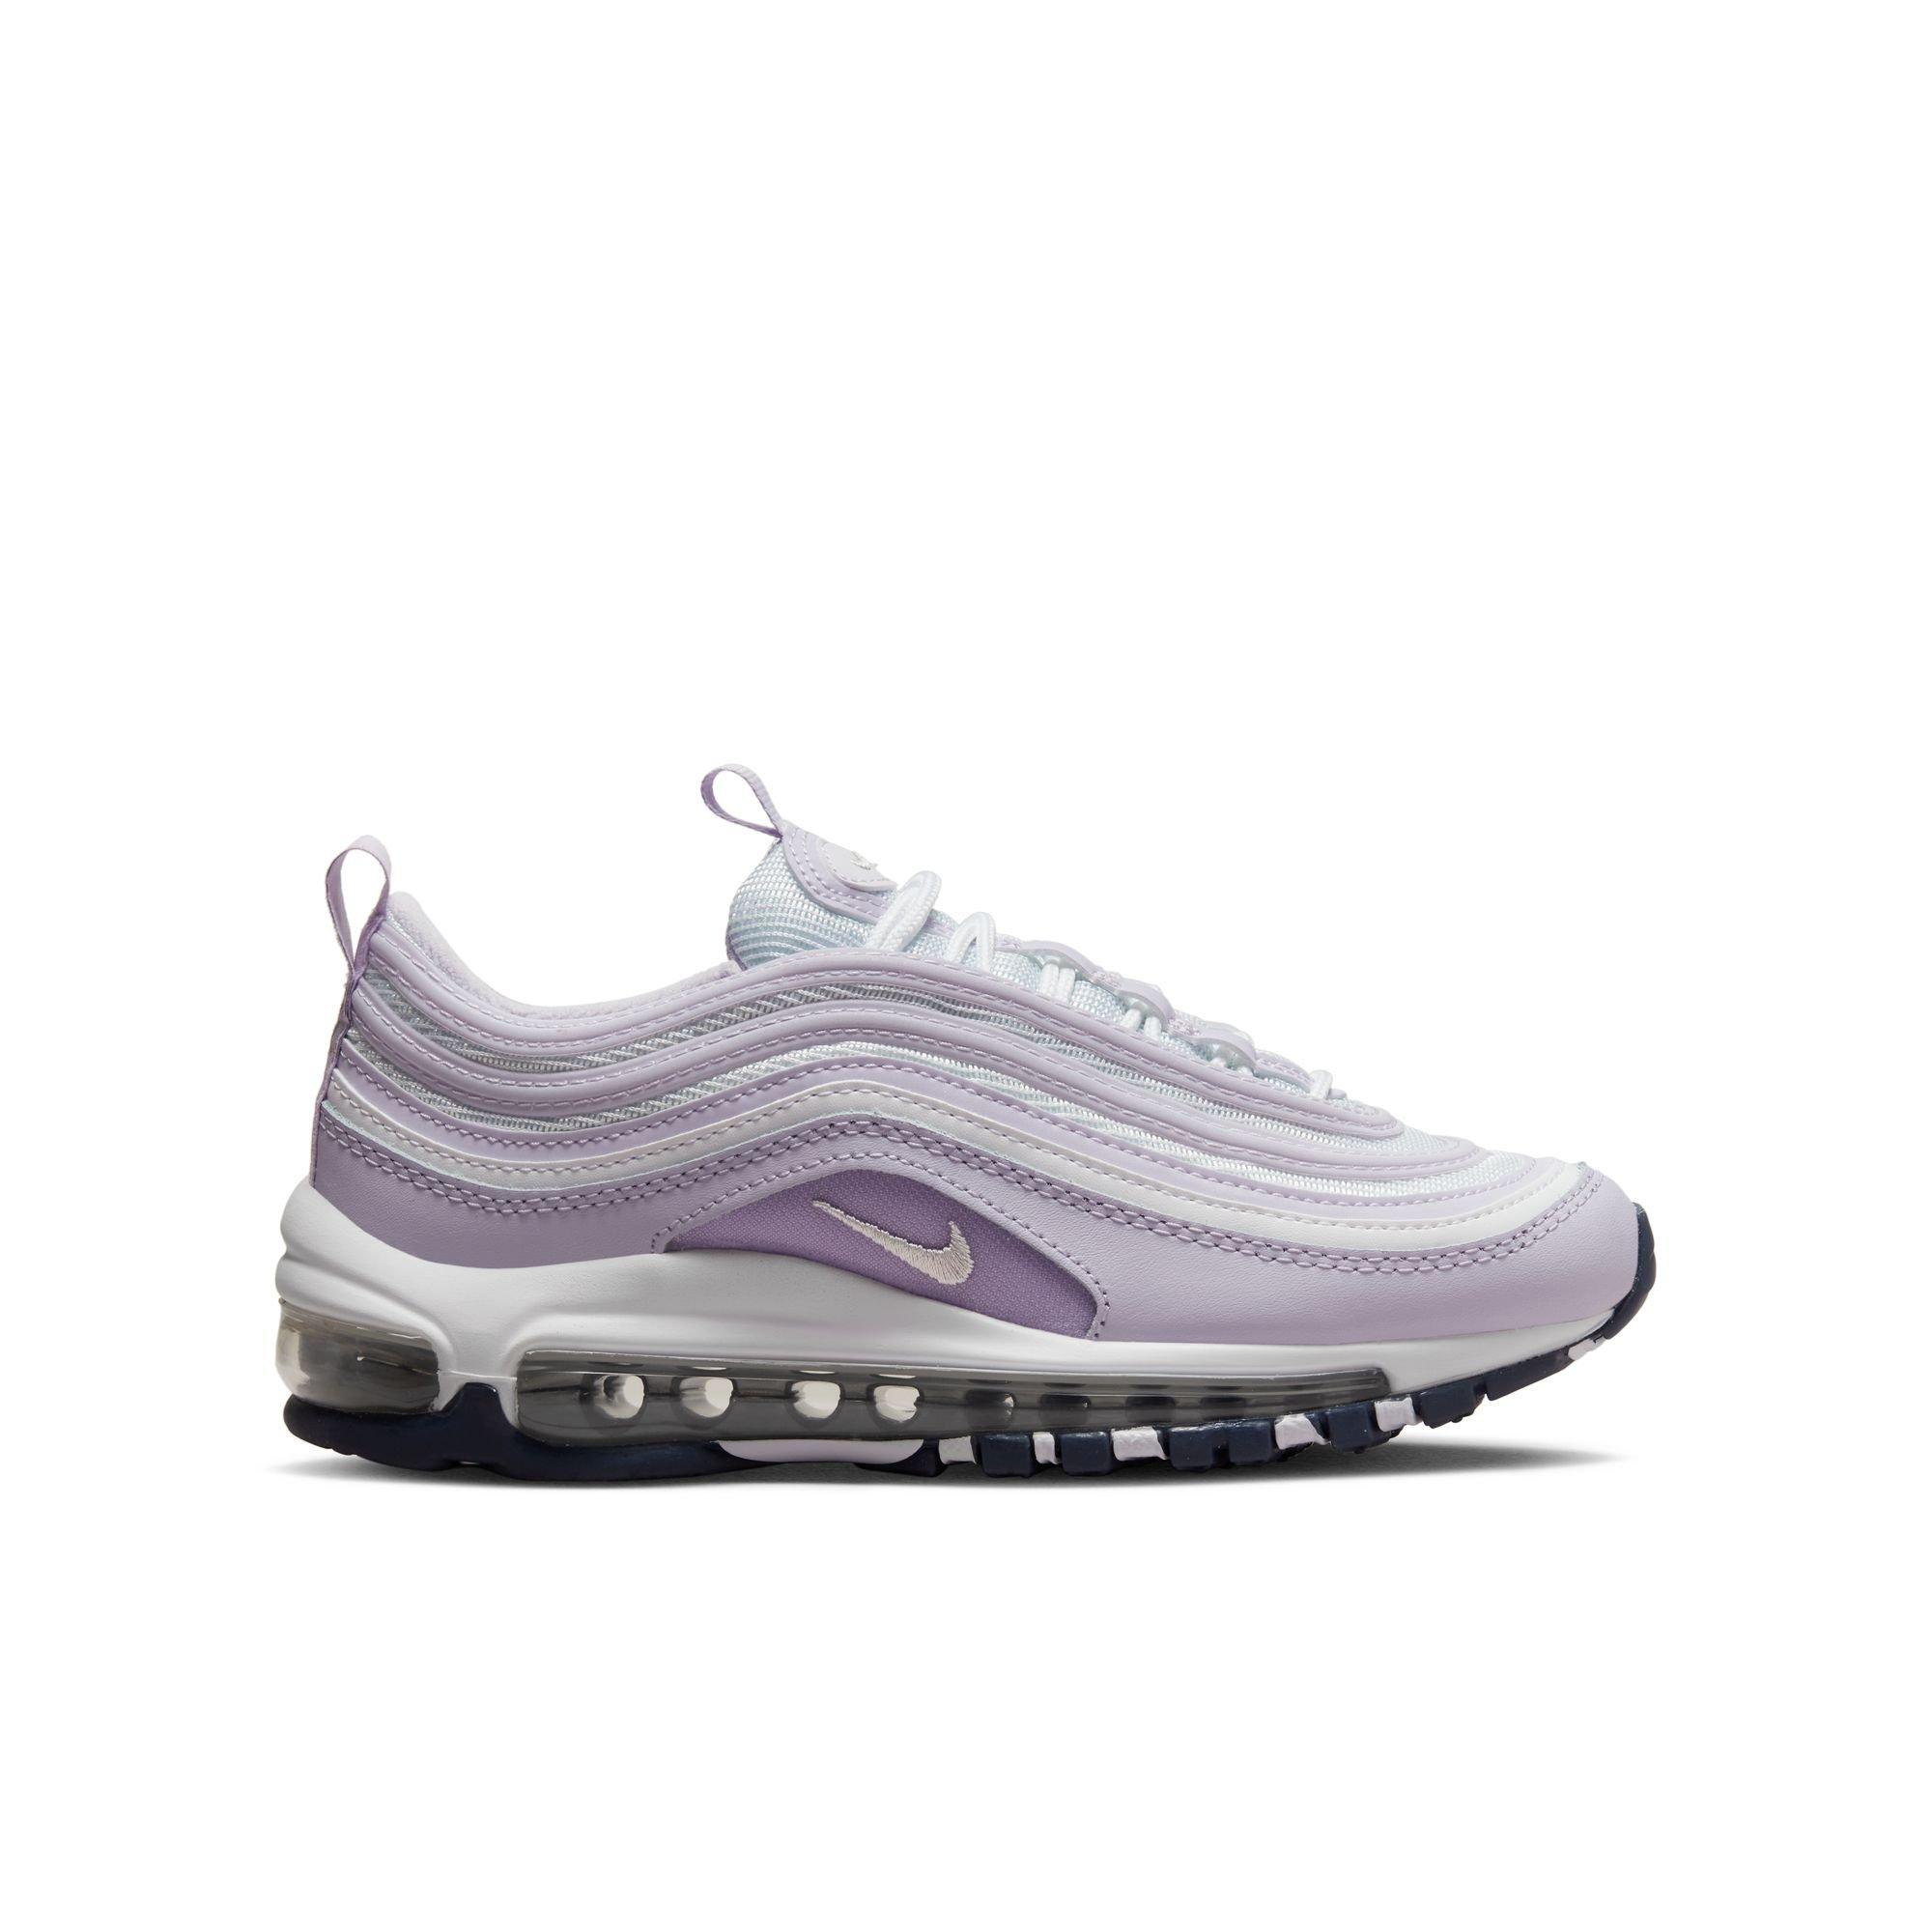 purple and white nike air max 97